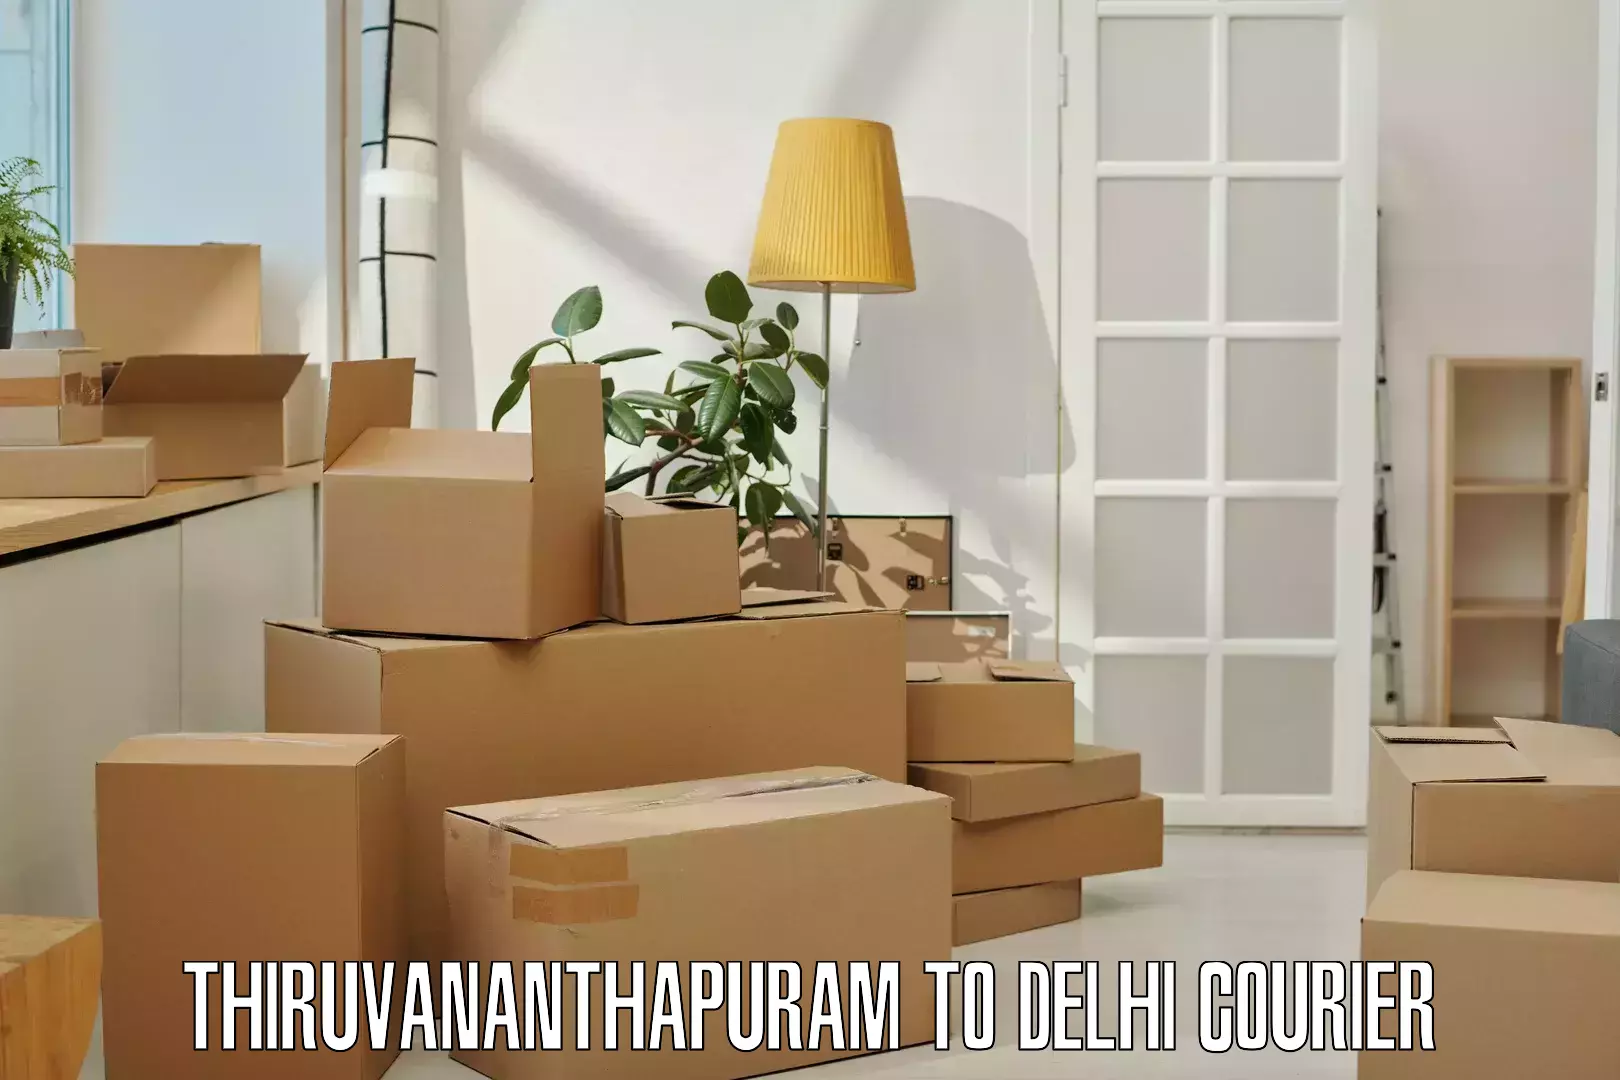 Subscription-based courier Thiruvananthapuram to University of Delhi